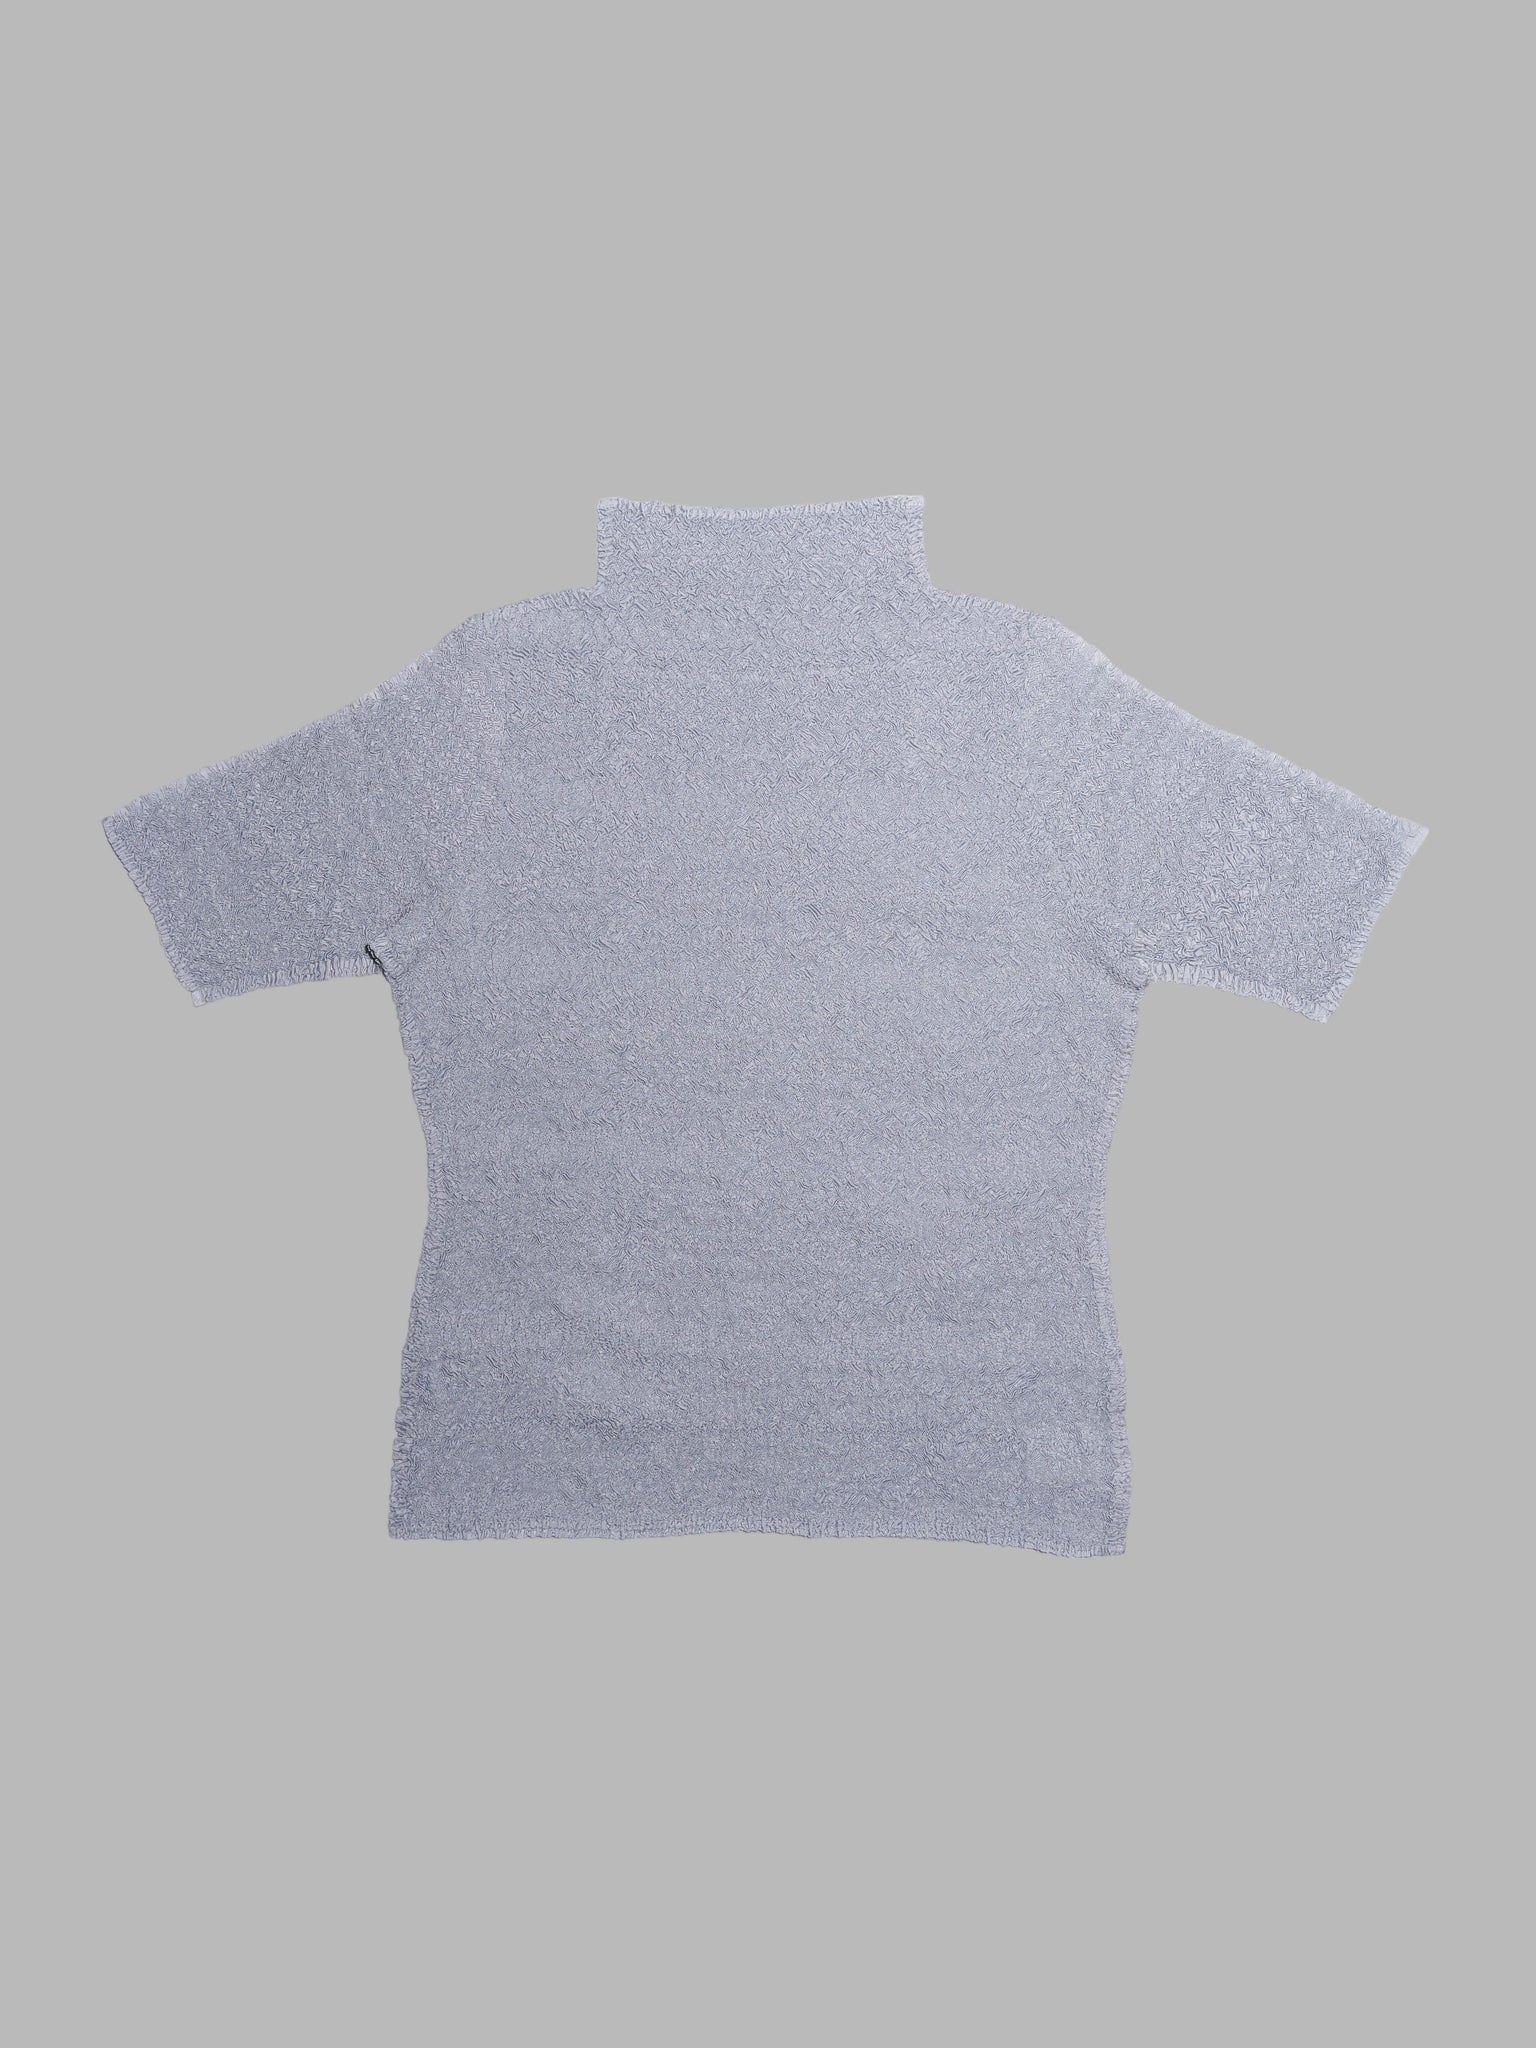 Wrinqle Inoue Pleats grey wrinkled polyester short sleeve mock neck top